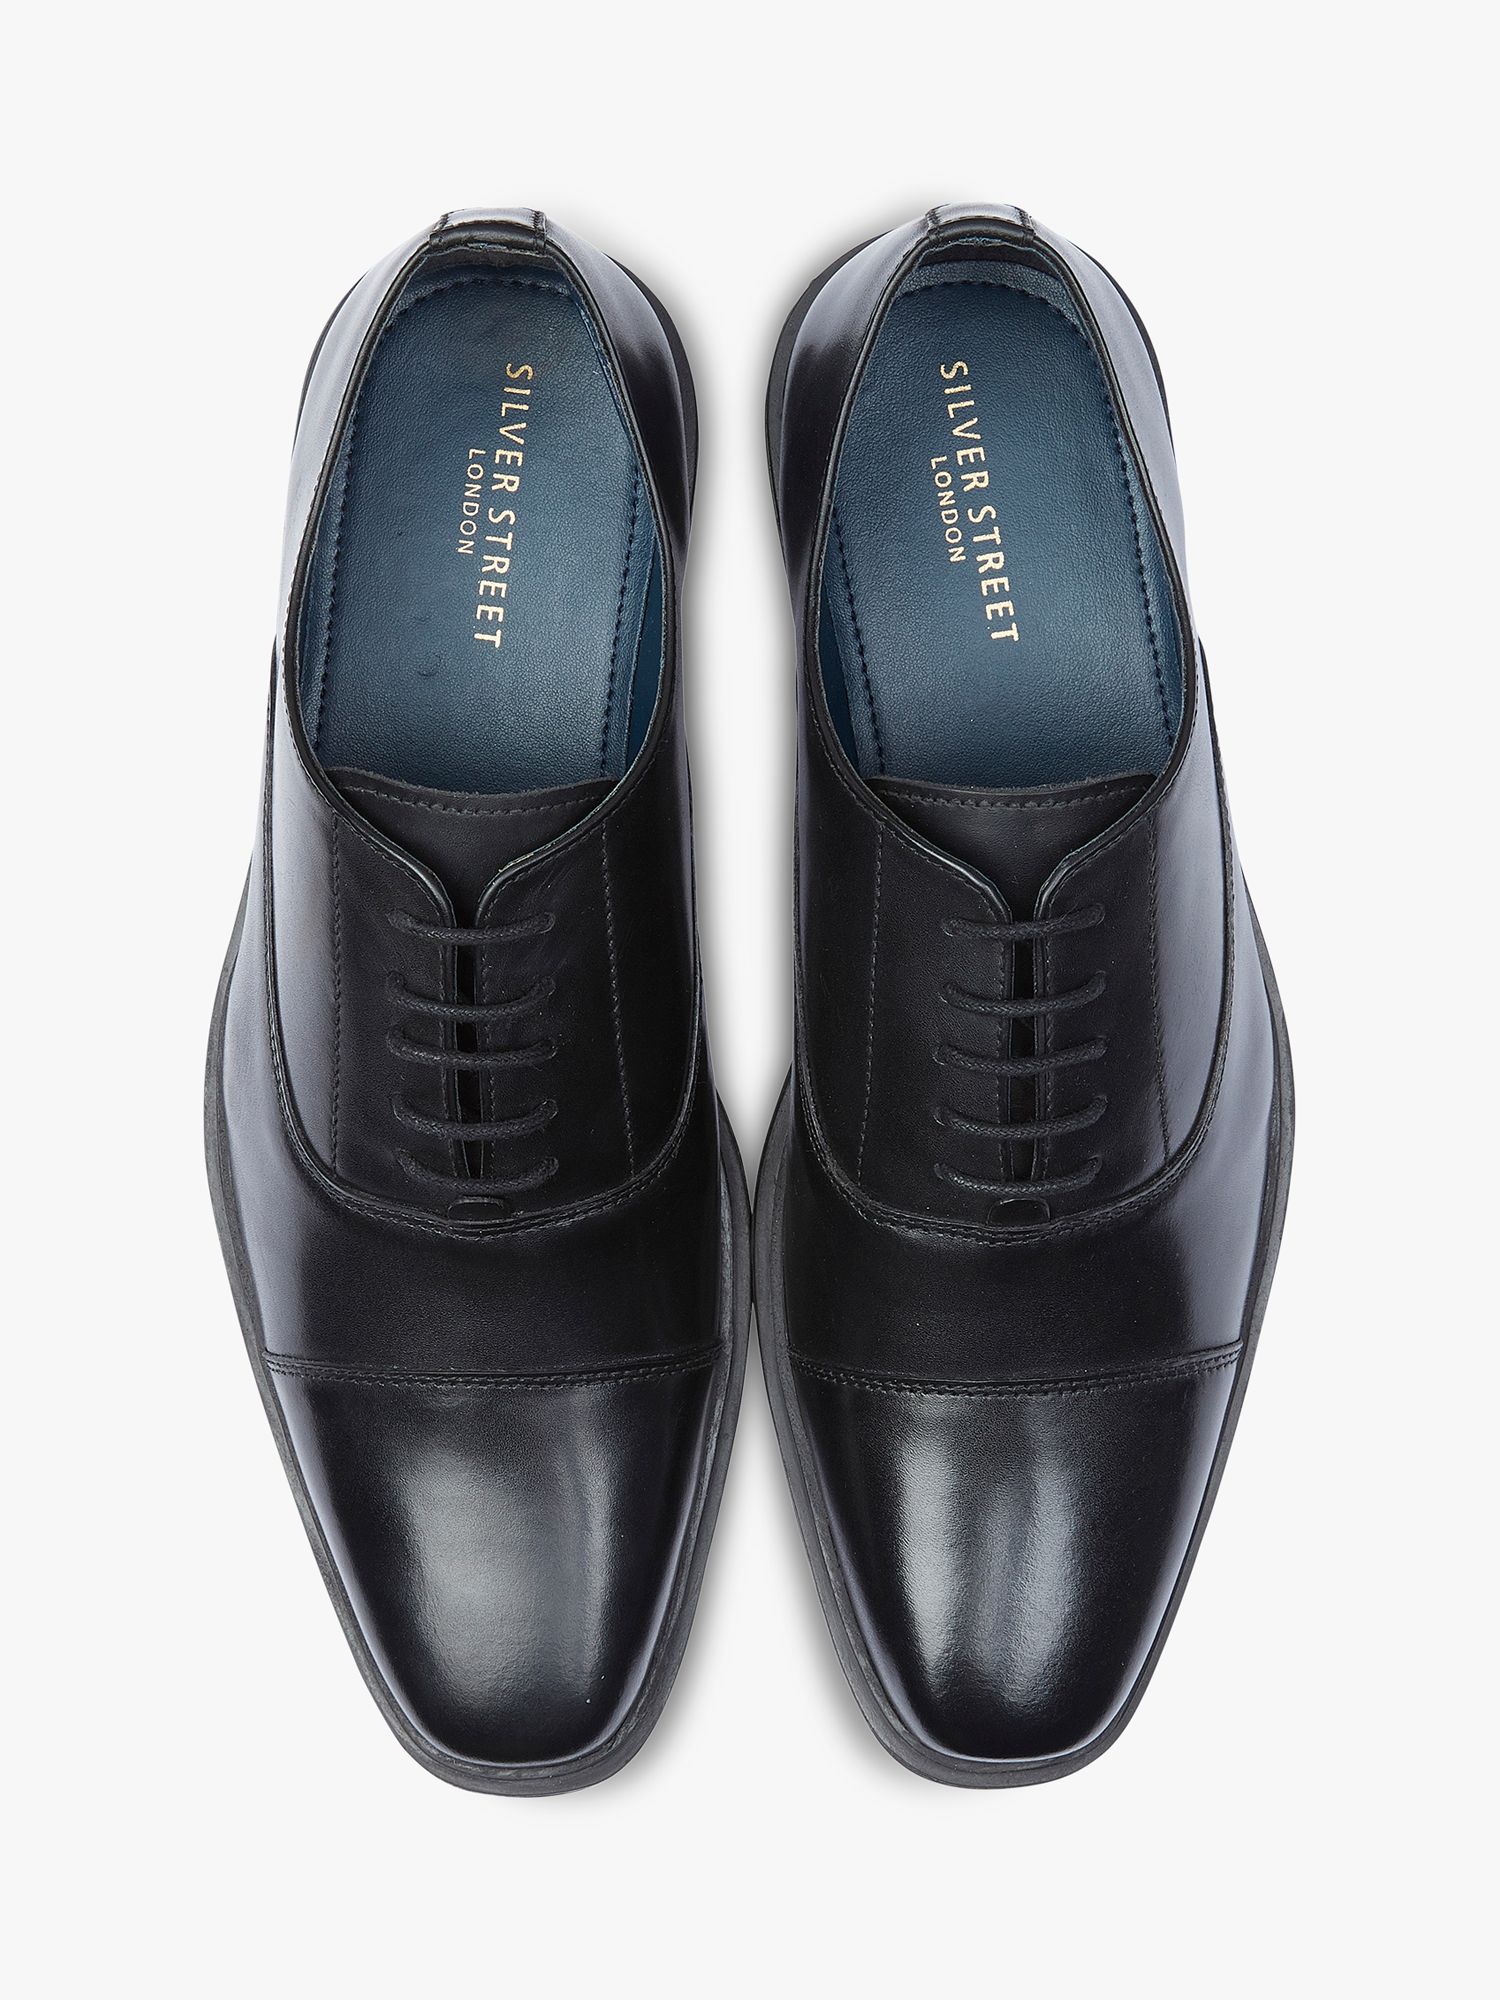 Silver Street London Burford Formal Derby Shoes, Black, 9